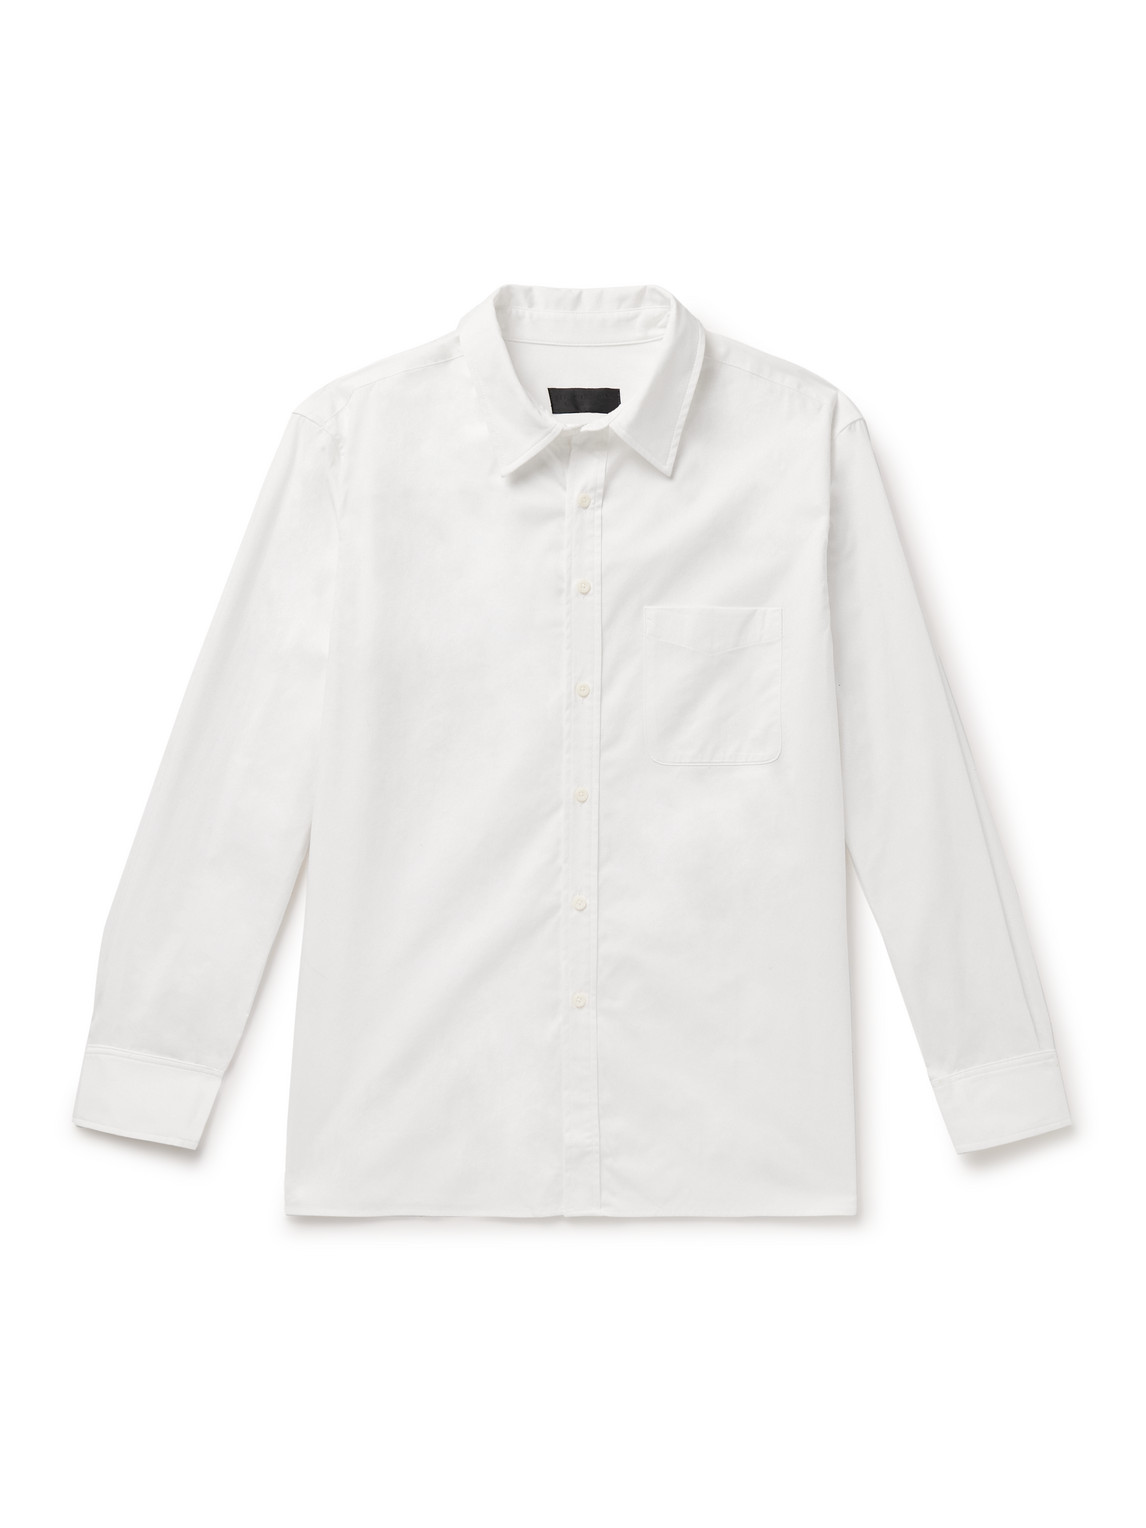 Nili Lotan - Finn Cotton-Poplin Shirt - Men - White - L von Nili Lotan